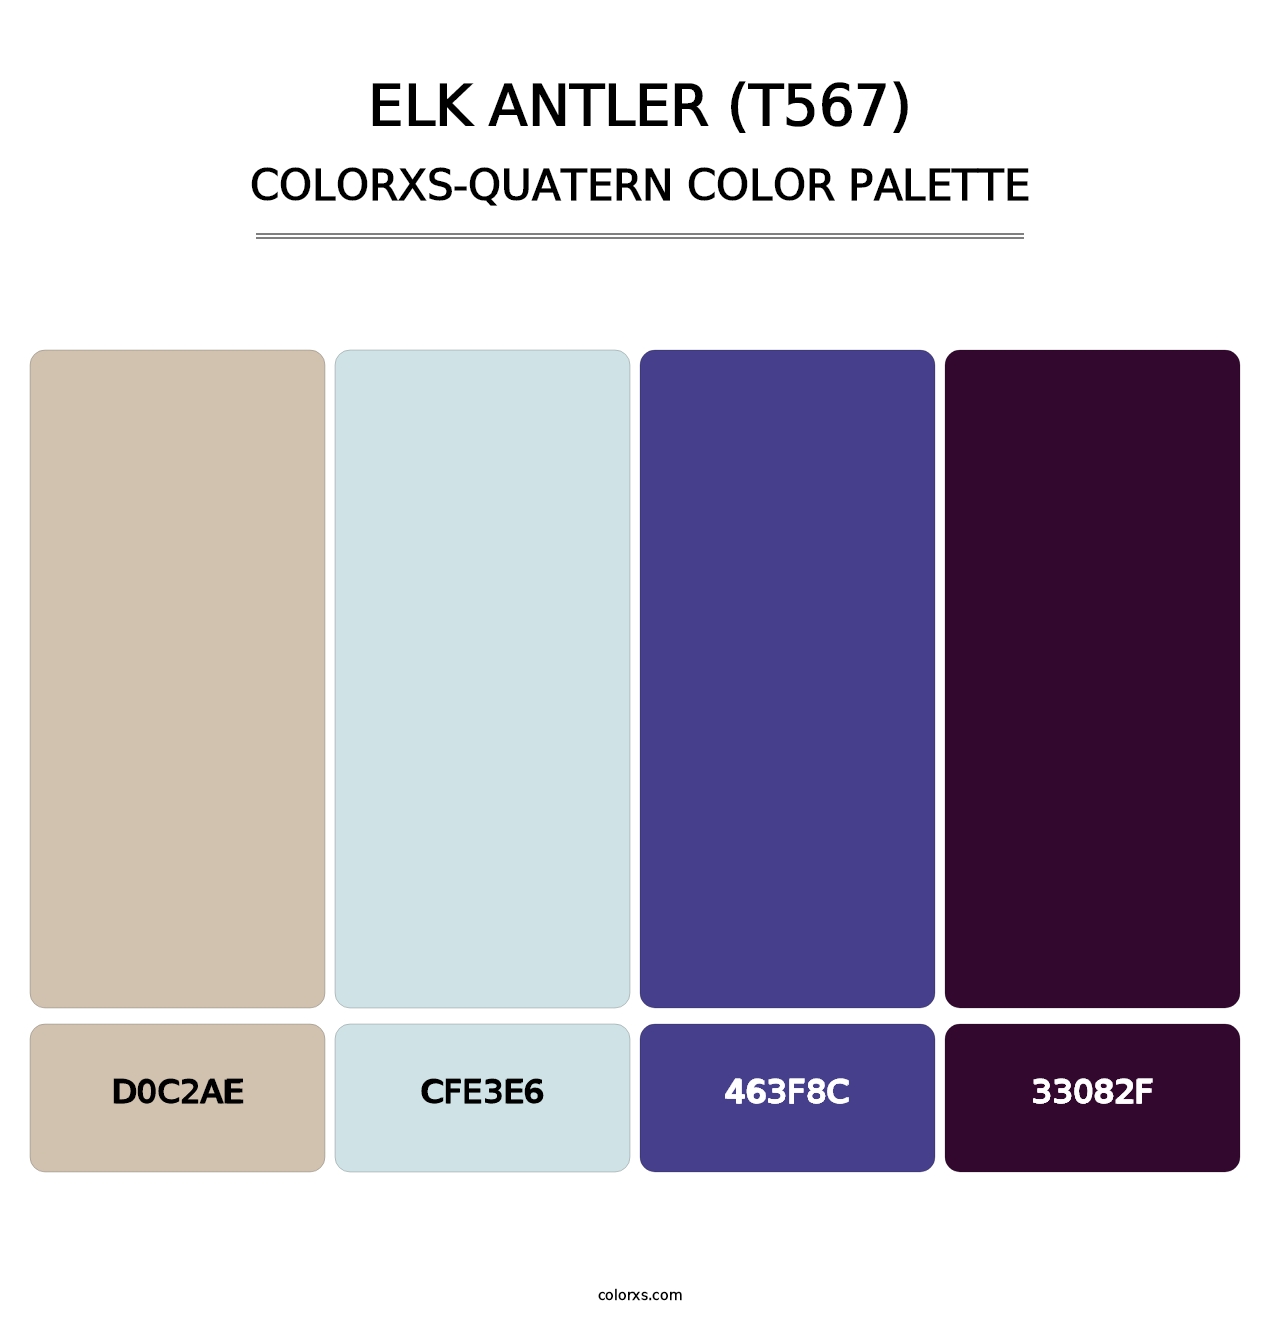 Elk Antler (T567) - Colorxs Quatern Palette